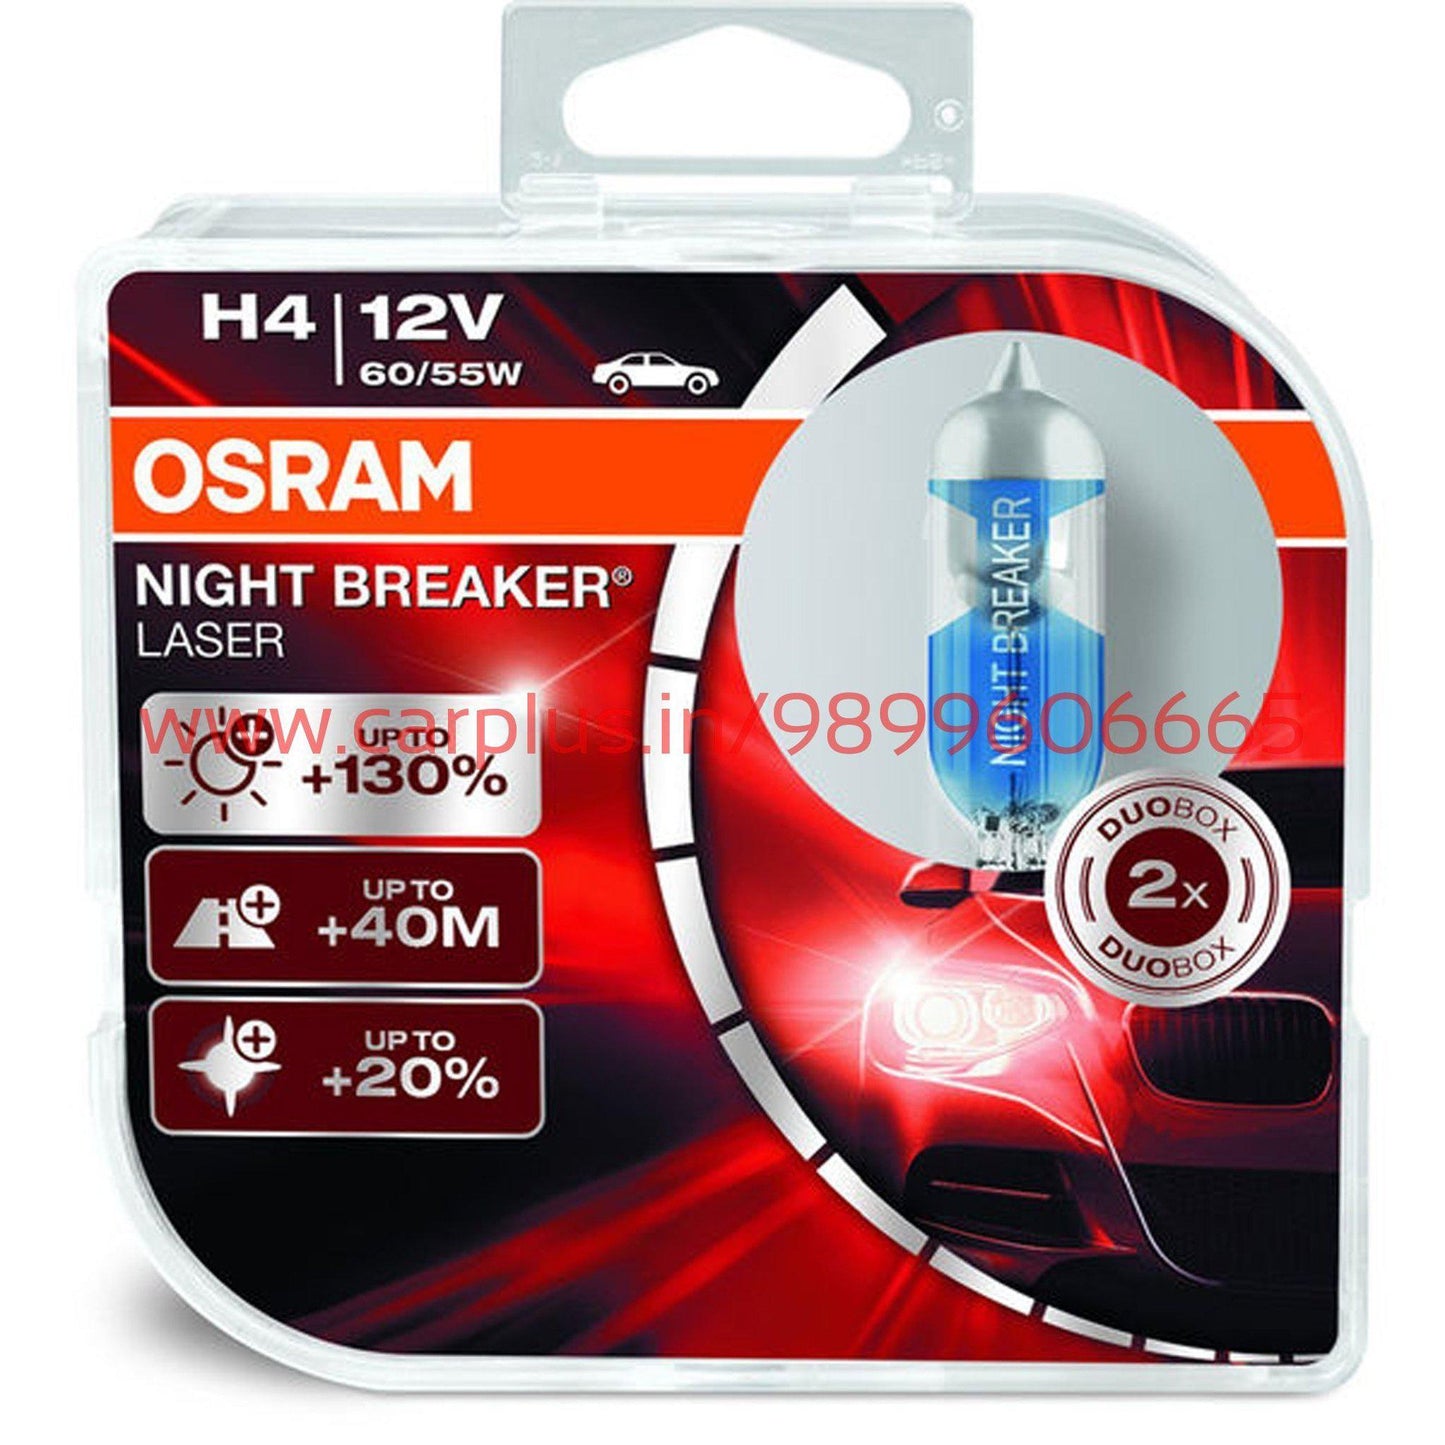 Osram LED T10 2980CW-02B Parking Bulb Set (12V, 1.5W) – CARPLUS